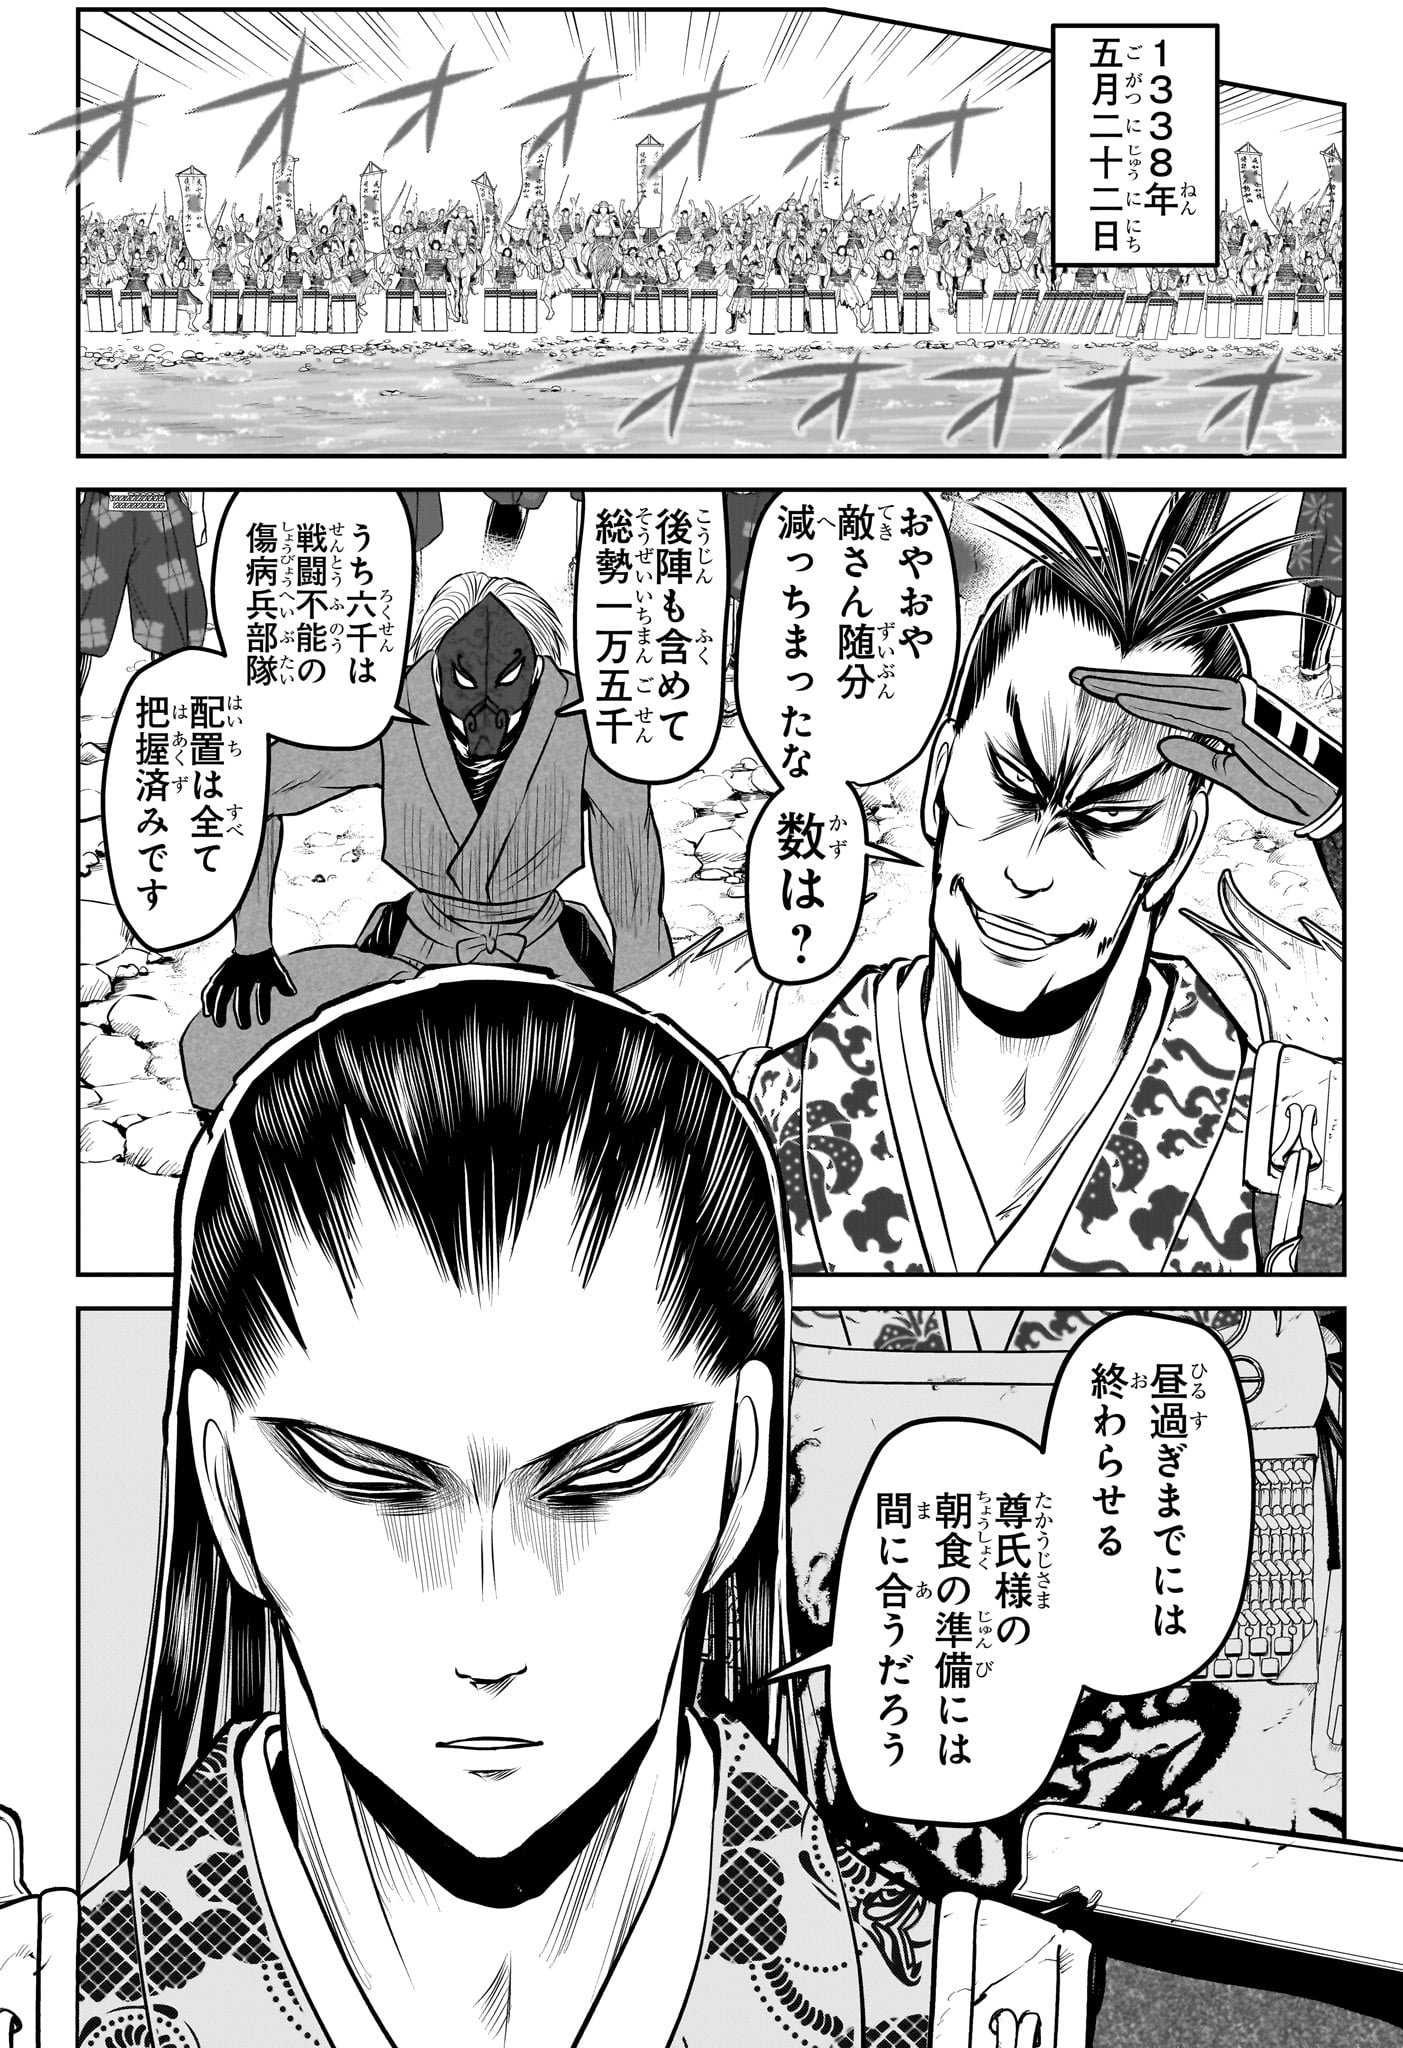 Nige Jouzu no Wakagimi - Chapter 156 - Page 18